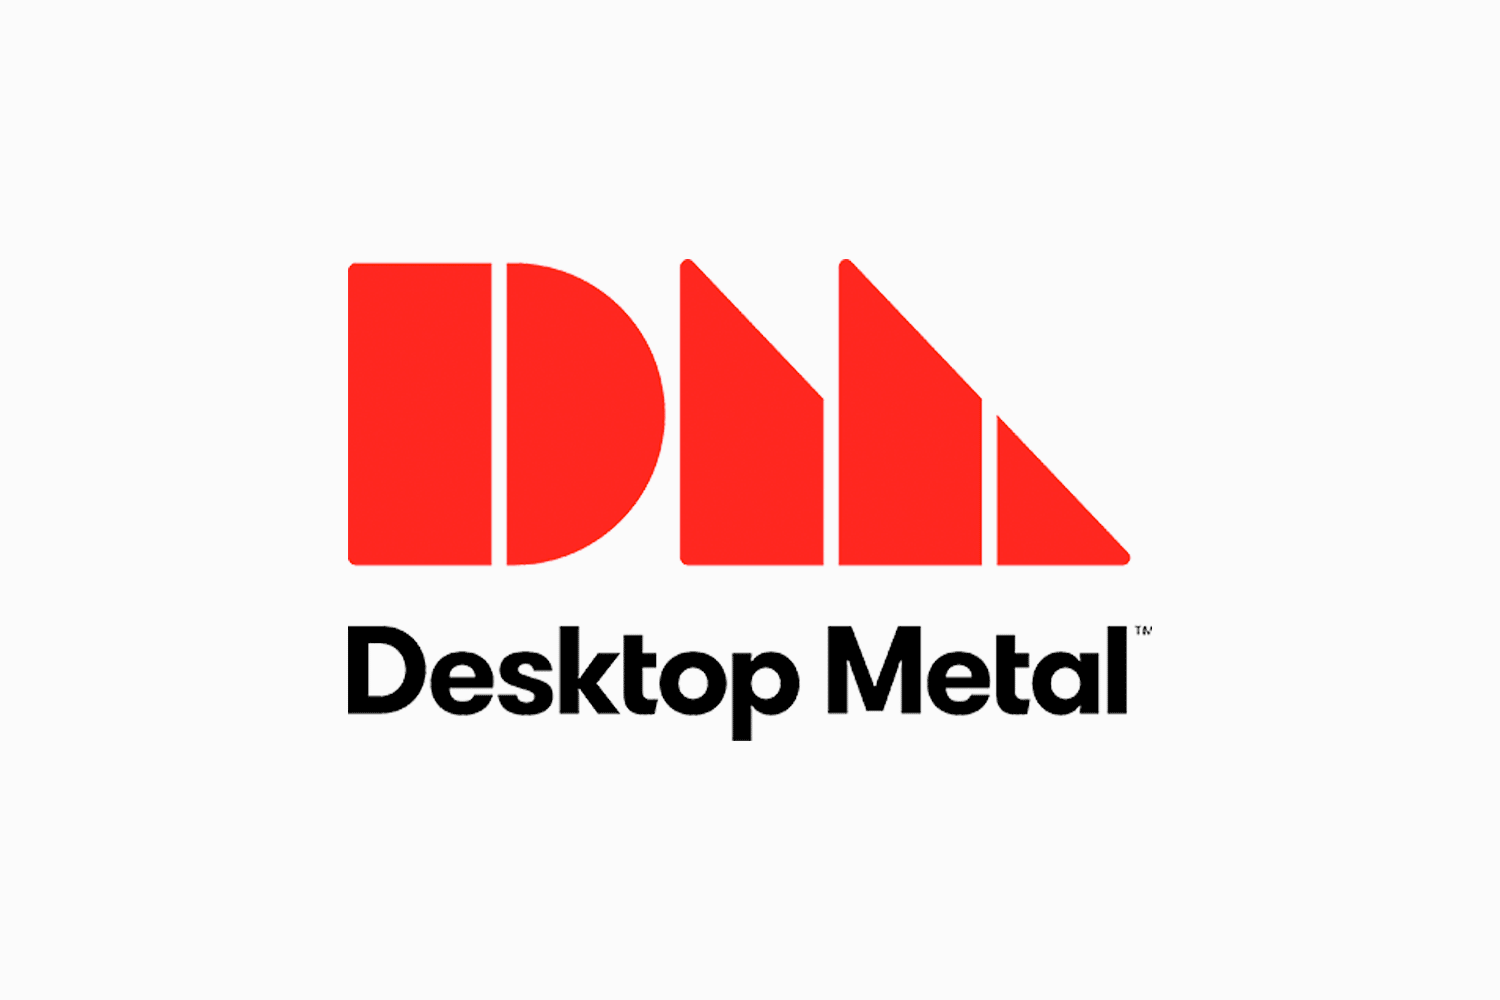 The strong impact of Desktop Metal